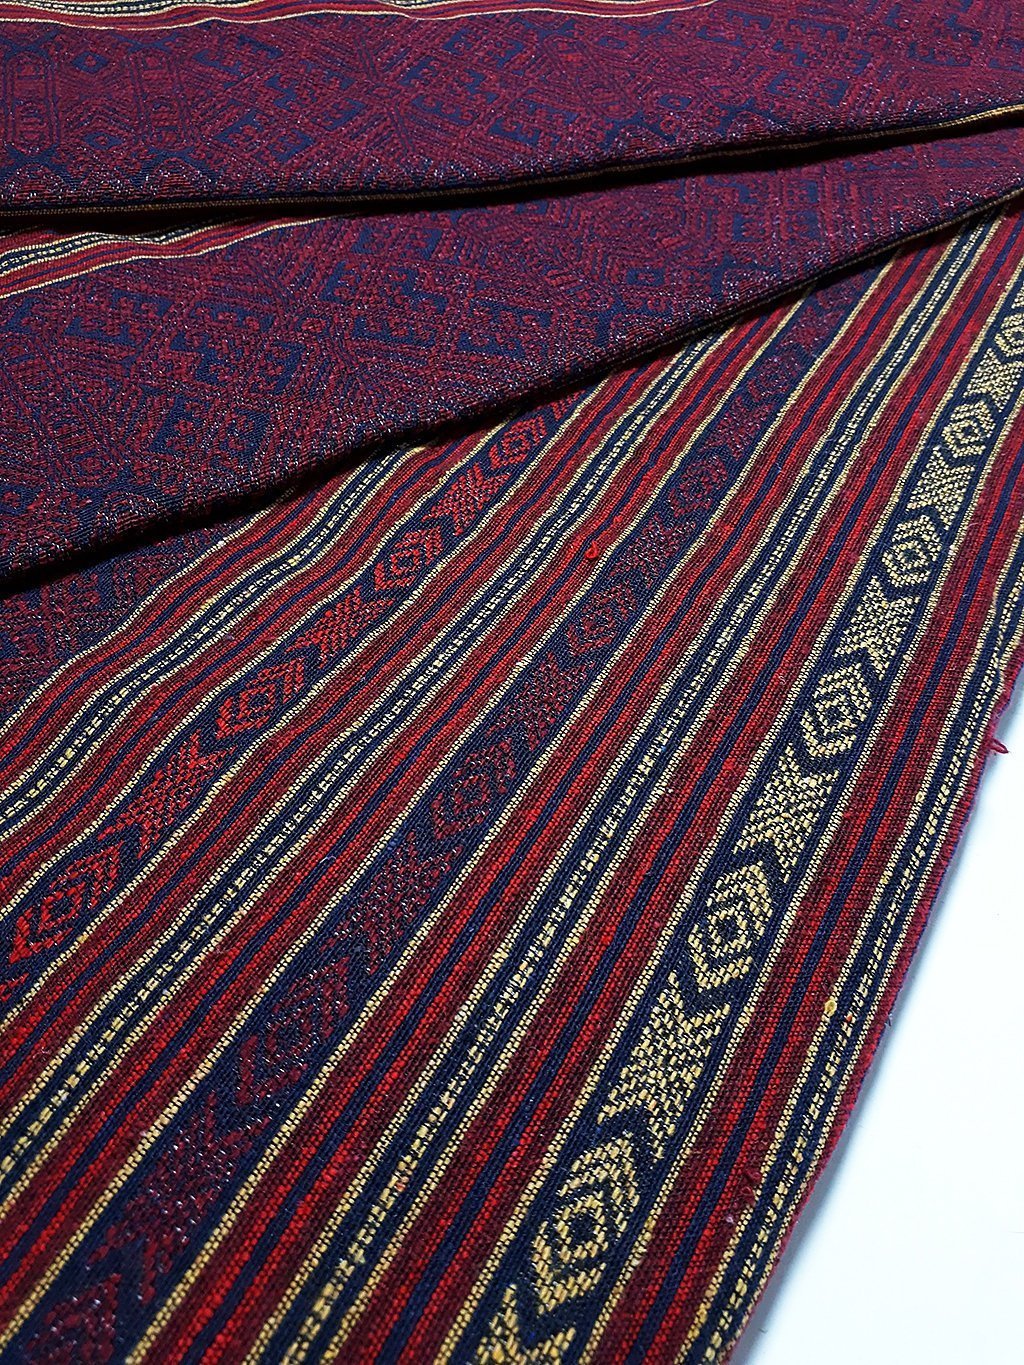 Thai Woven Fabric Tribal Fabric Native Cotton Fabric by the yard Ethnic fabric Craft fabric Craft Supplies Woven Textile 1/2 yard (WFF206)